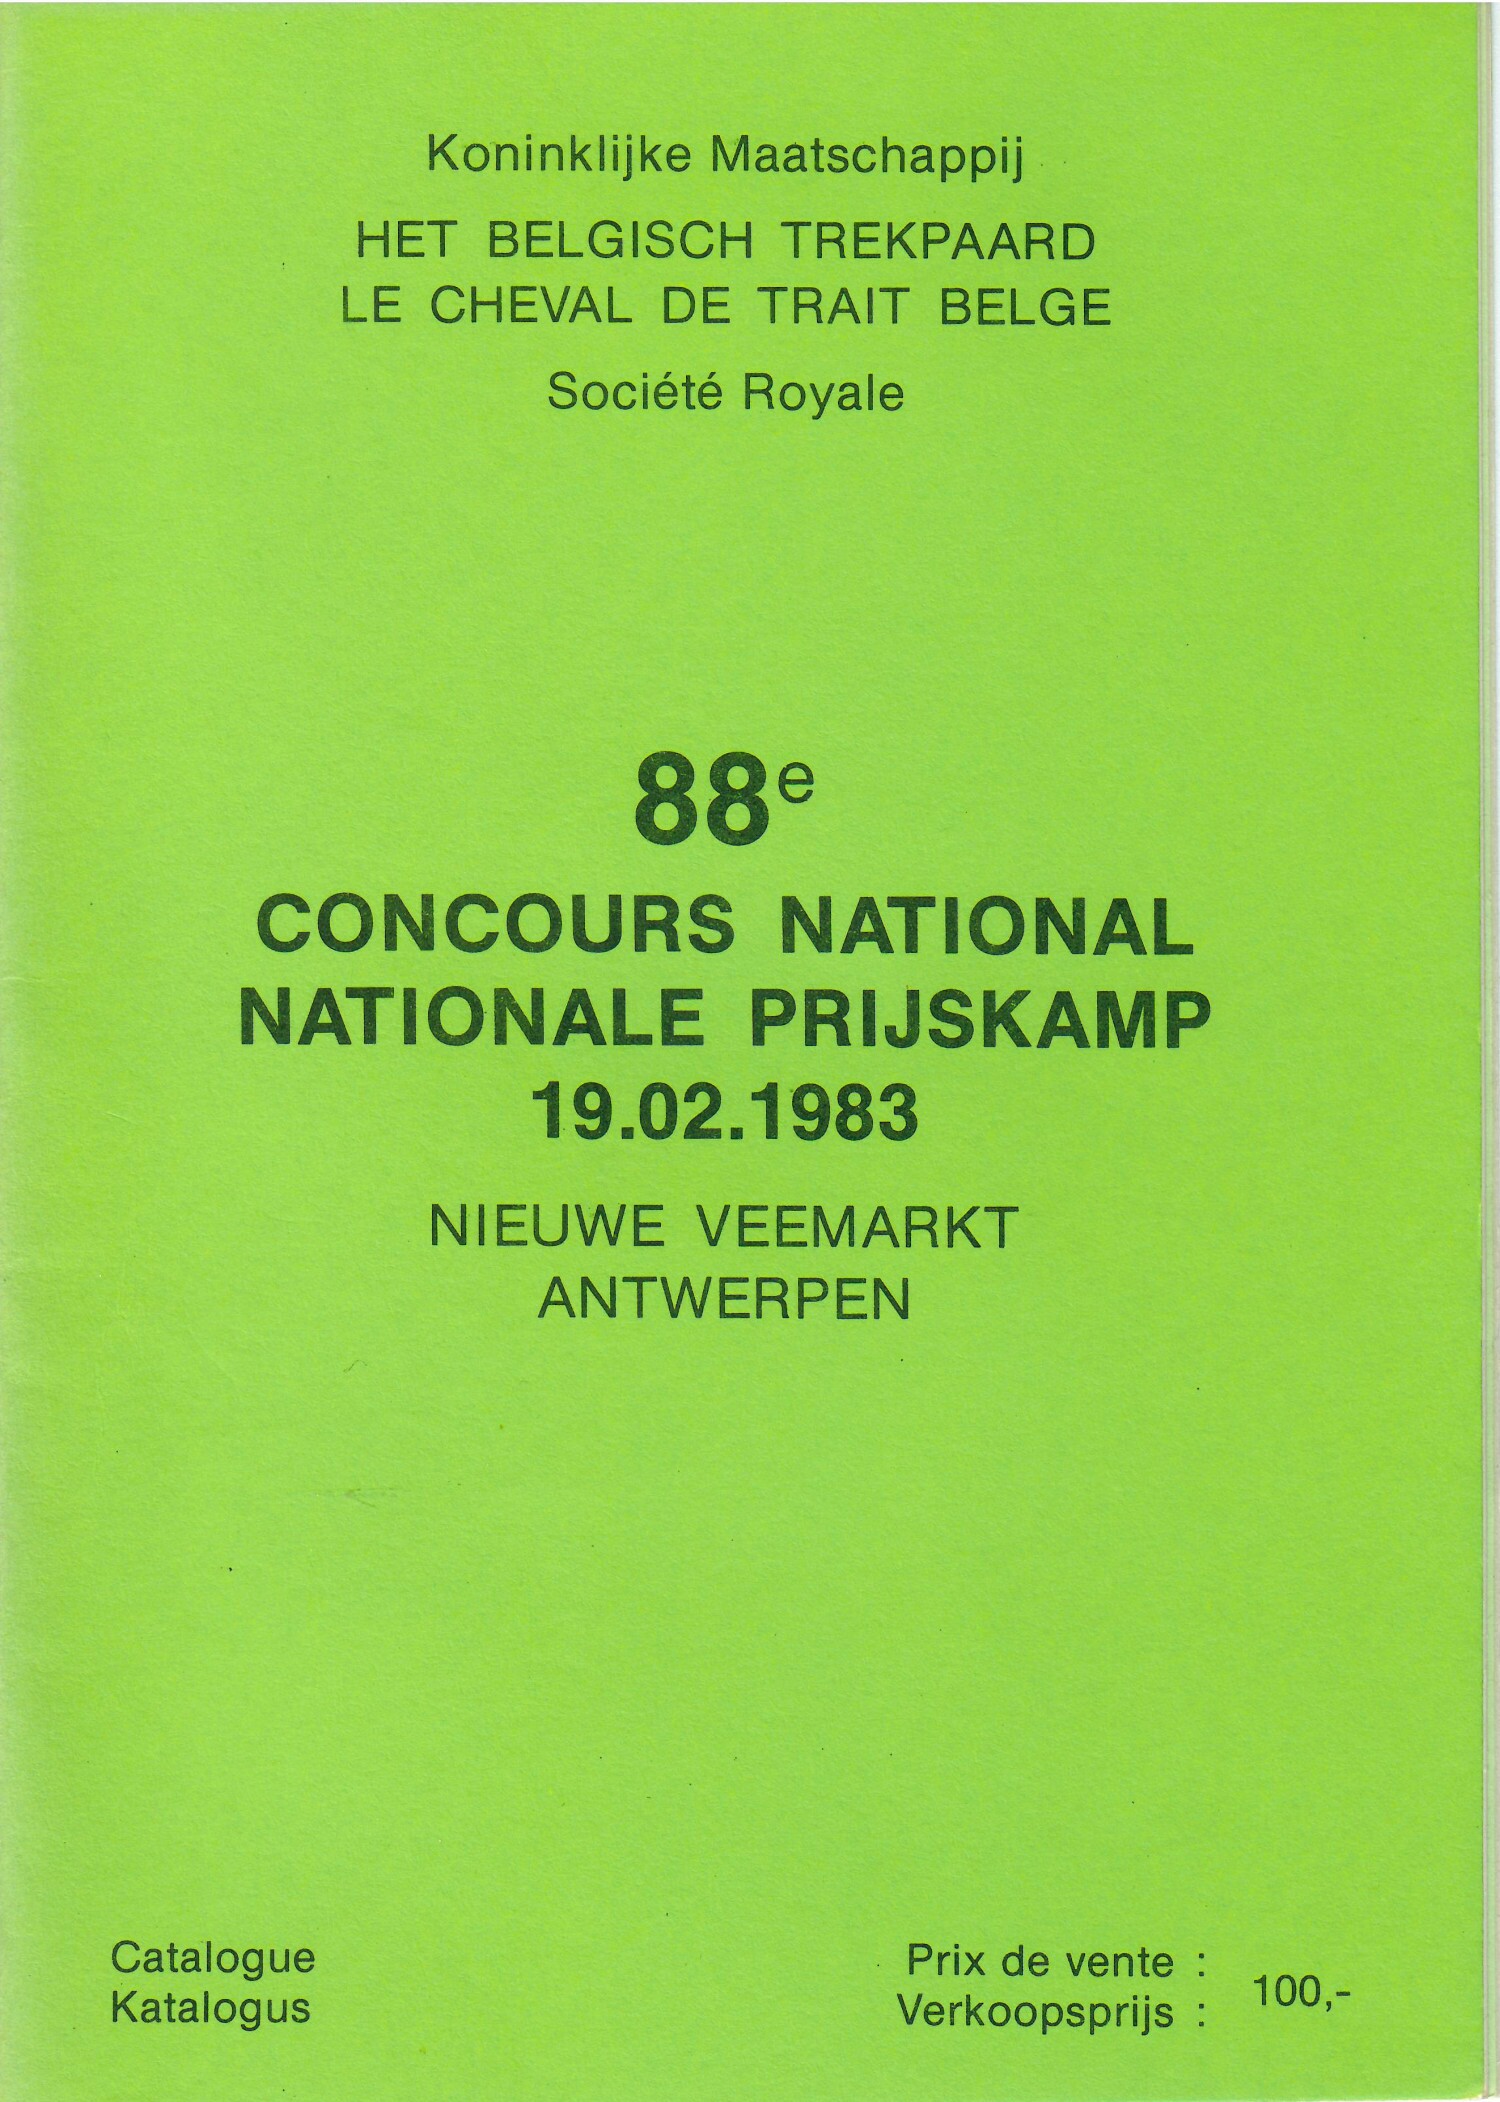 Les Cheval de trait belge et adennes 1990 (Herausgeber RR-R)